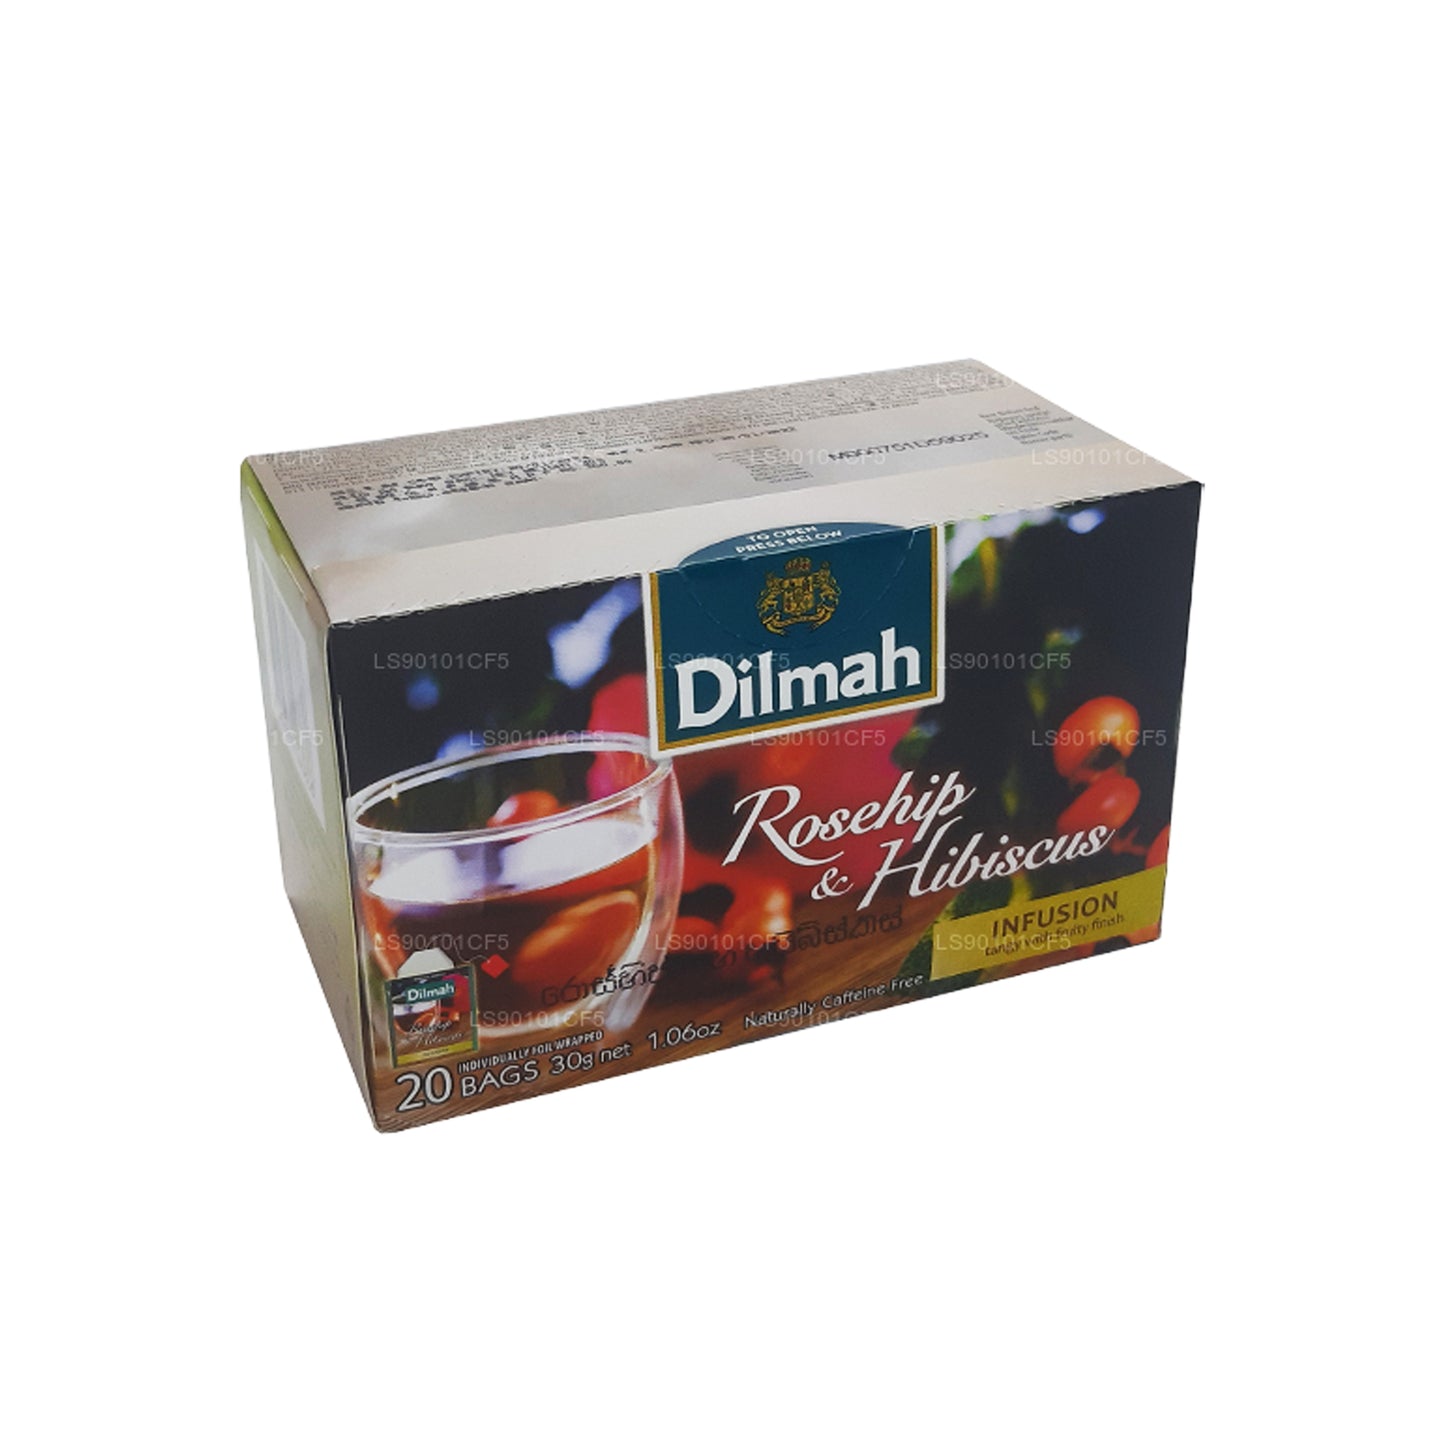 Dilmah Kuşburnu & Hibiscus Aromalı Siyah Çay (30g)